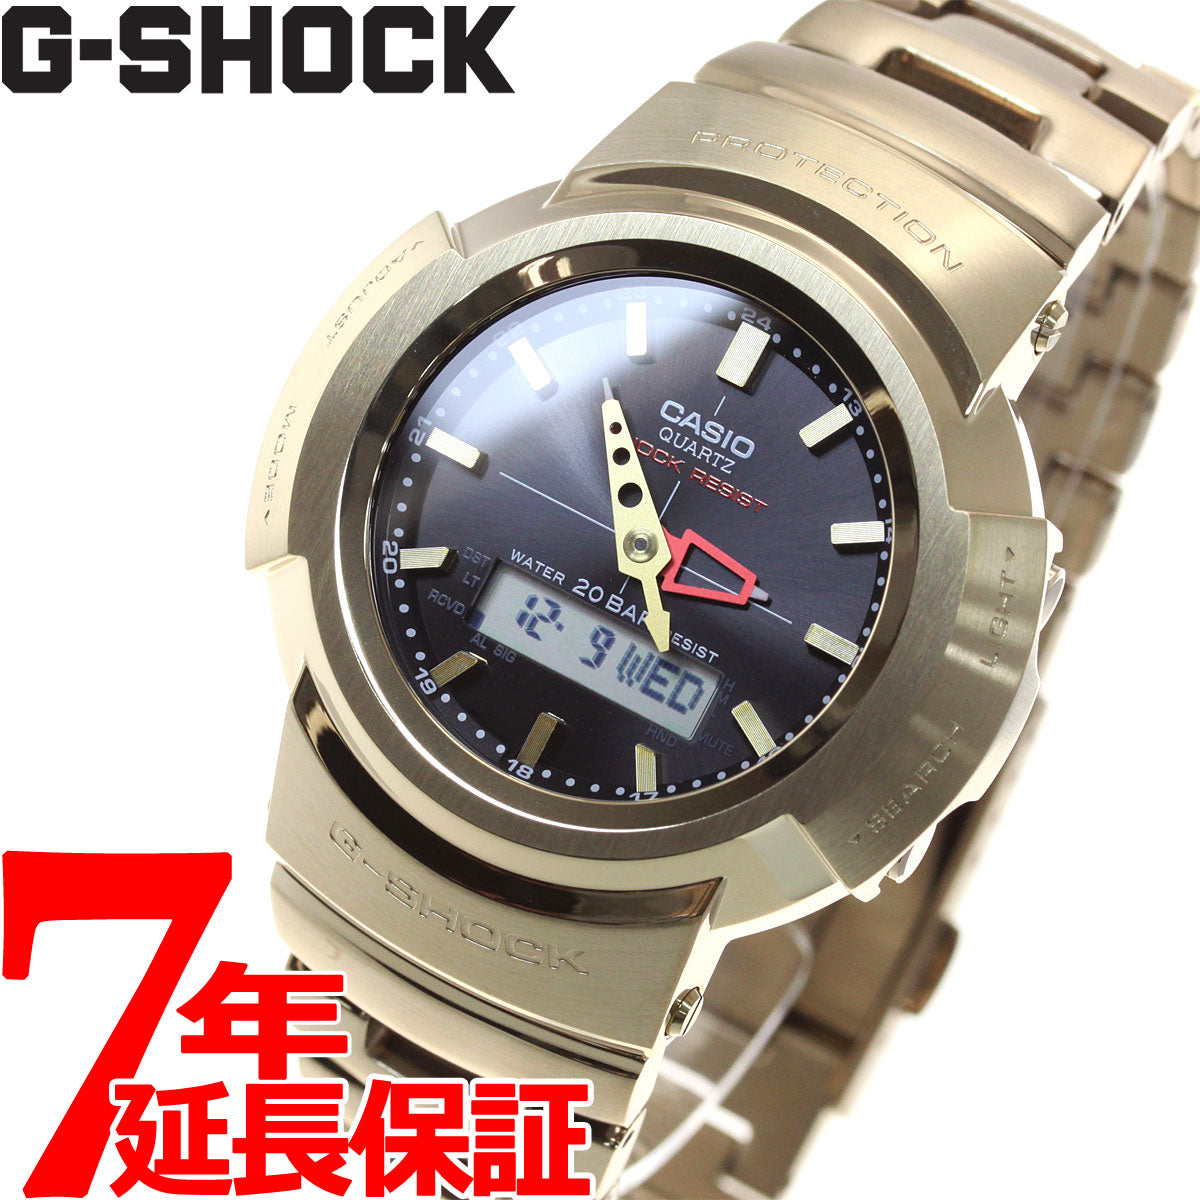 G-SHOCK 電波 ソーラー 電波時計 カシオ Gショック 腕時計 メンズ AWM-500GD-9AJF